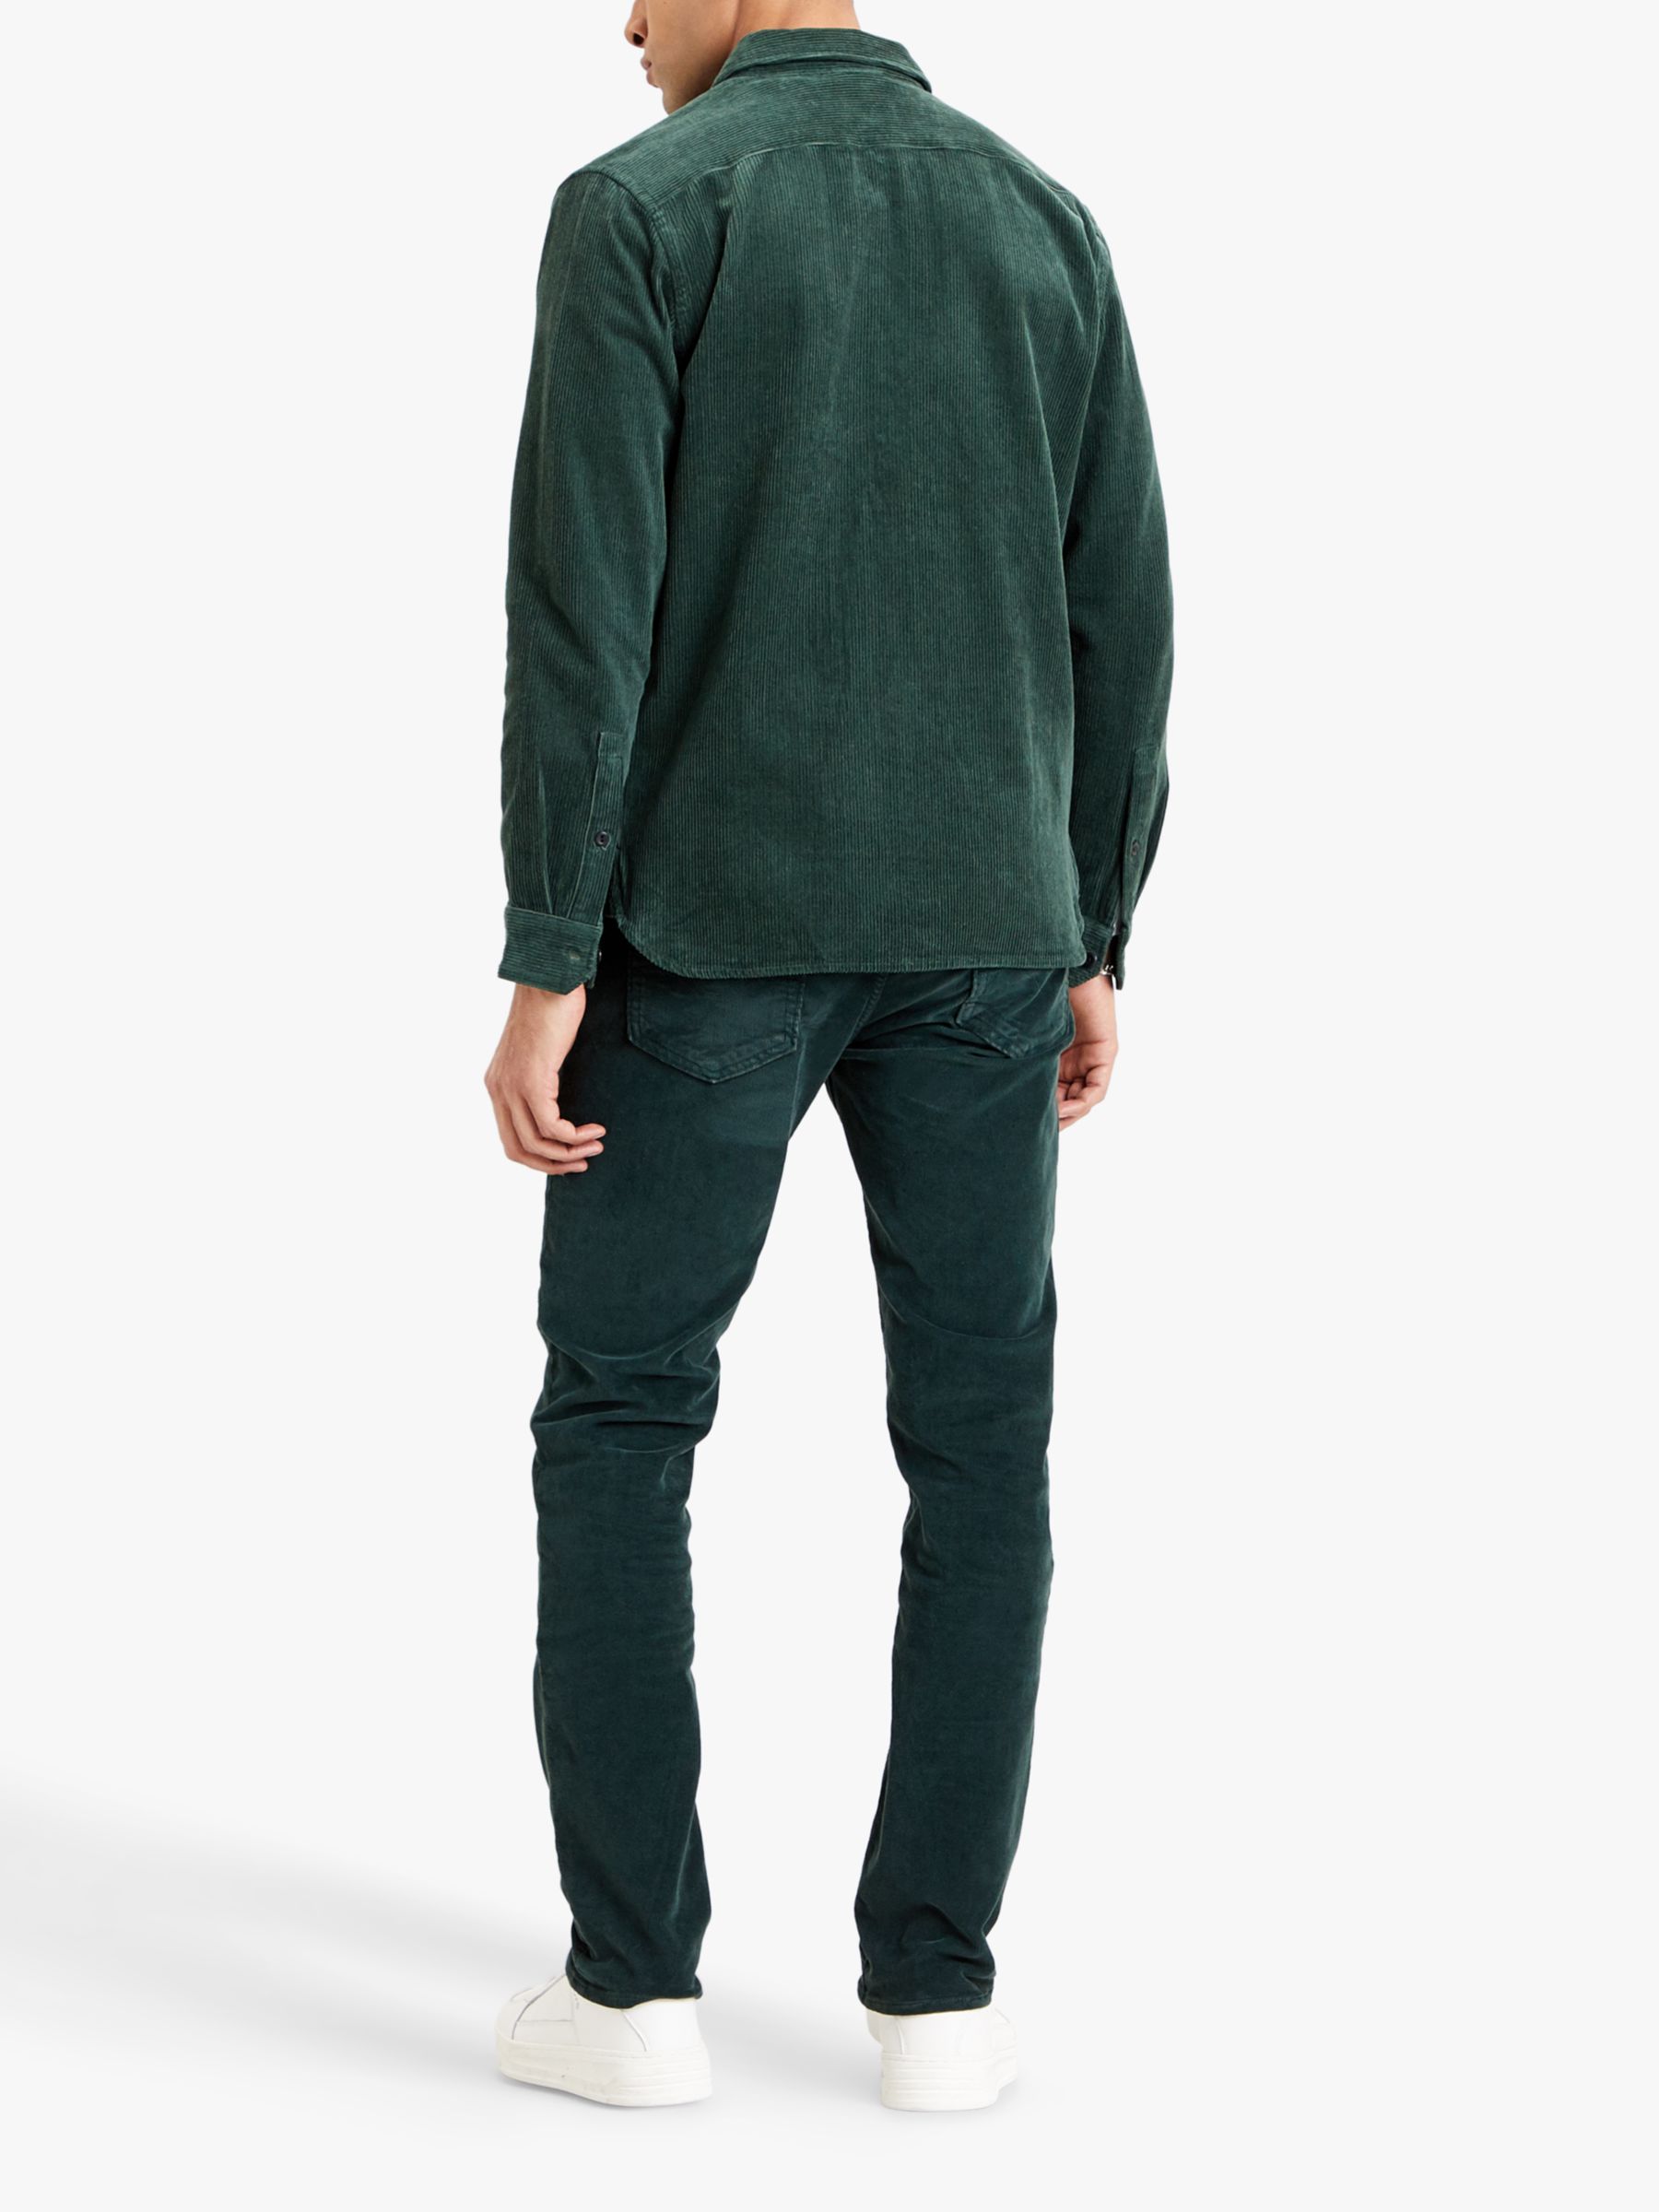 levis green cord shirt